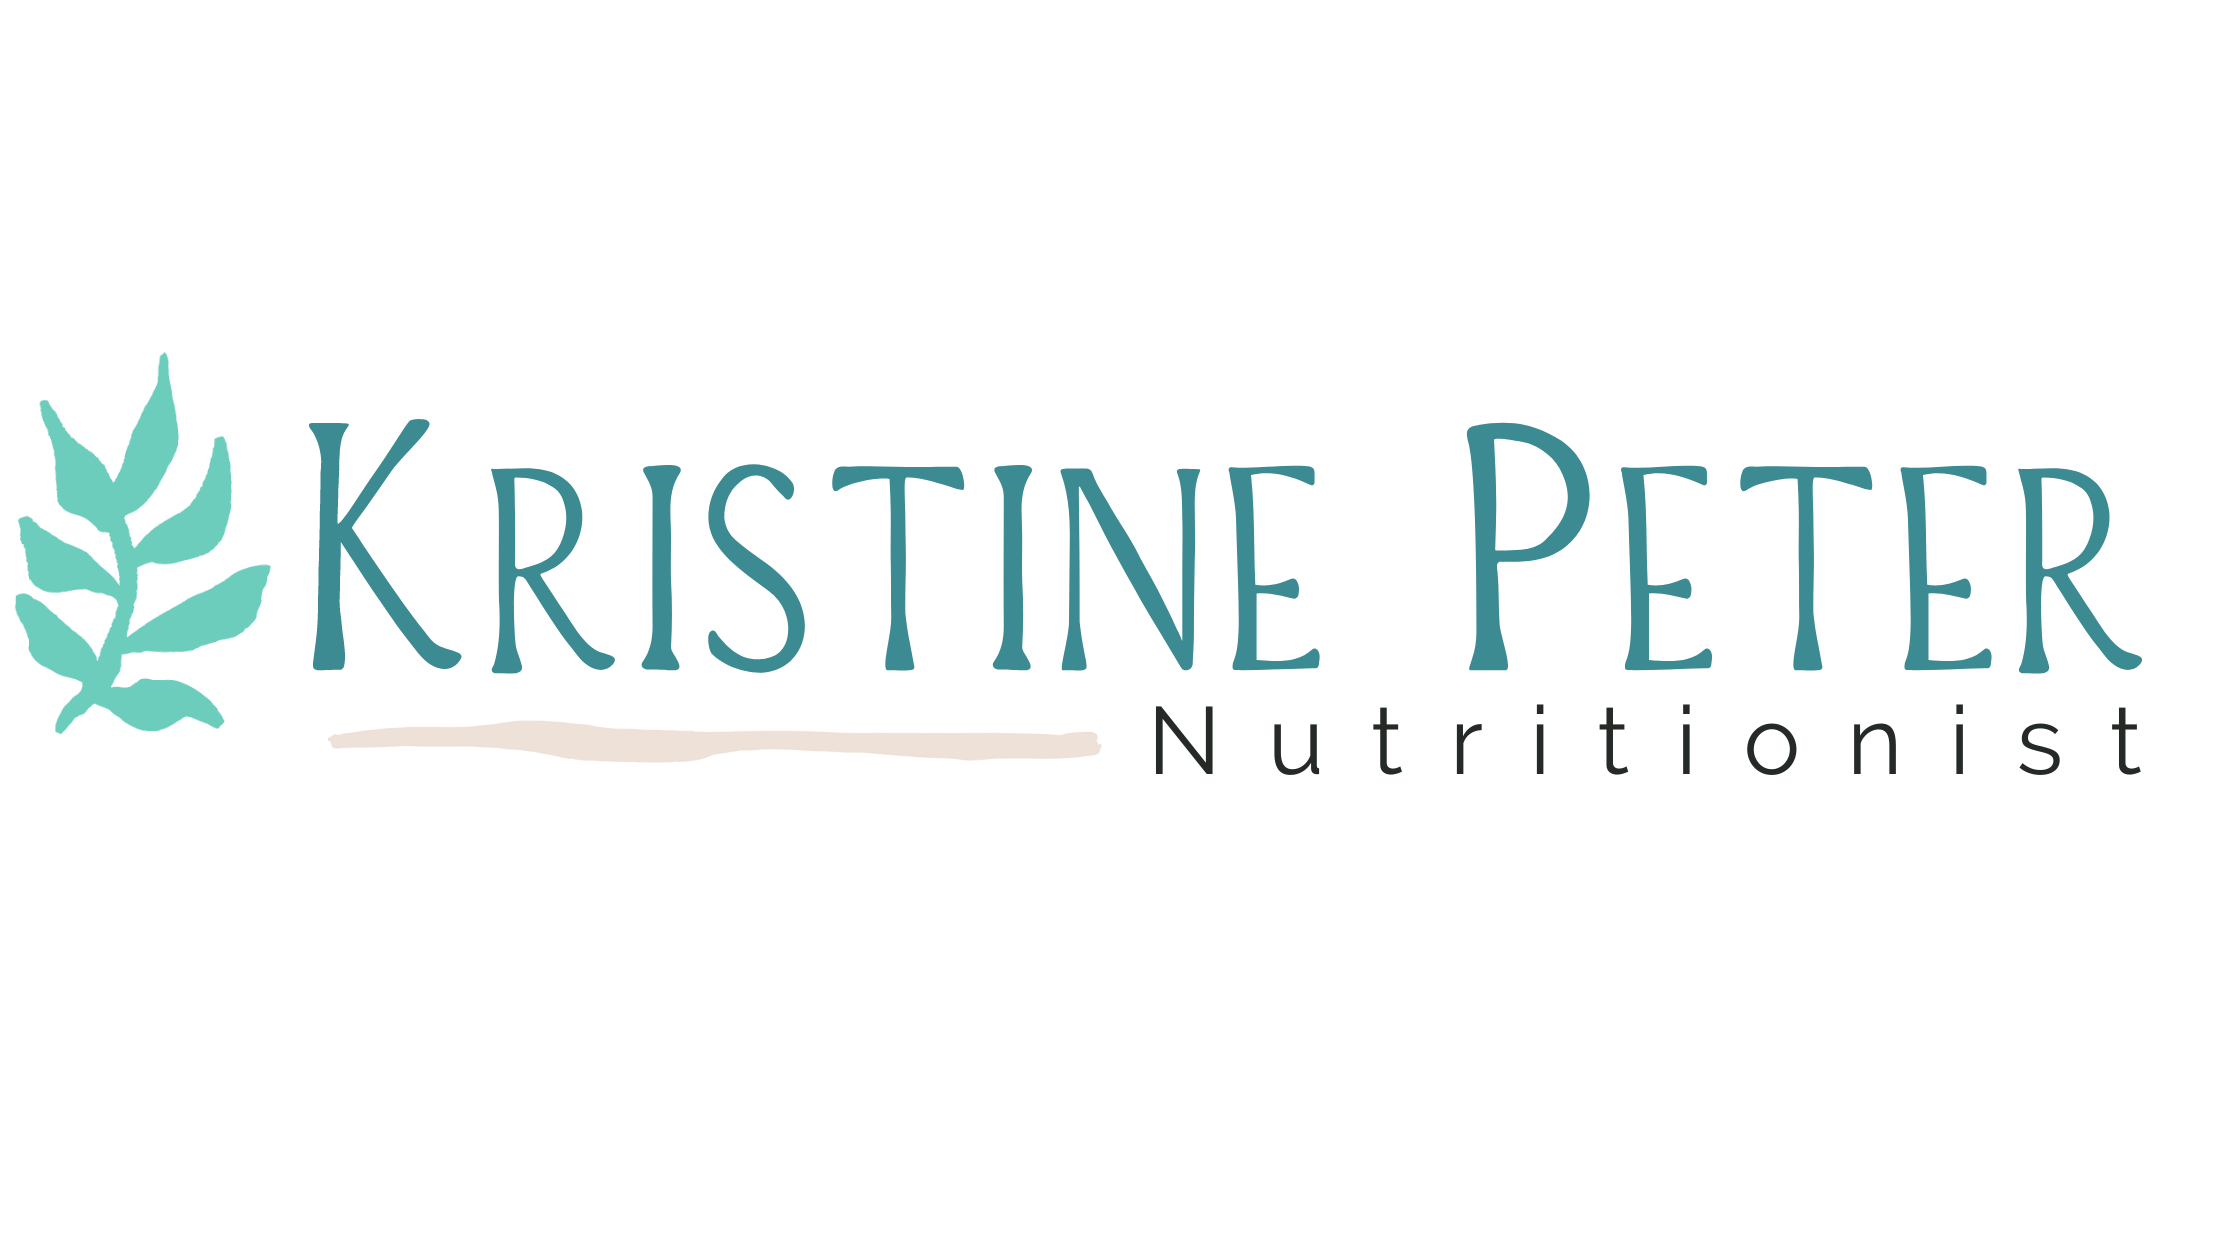 Kristine Peter